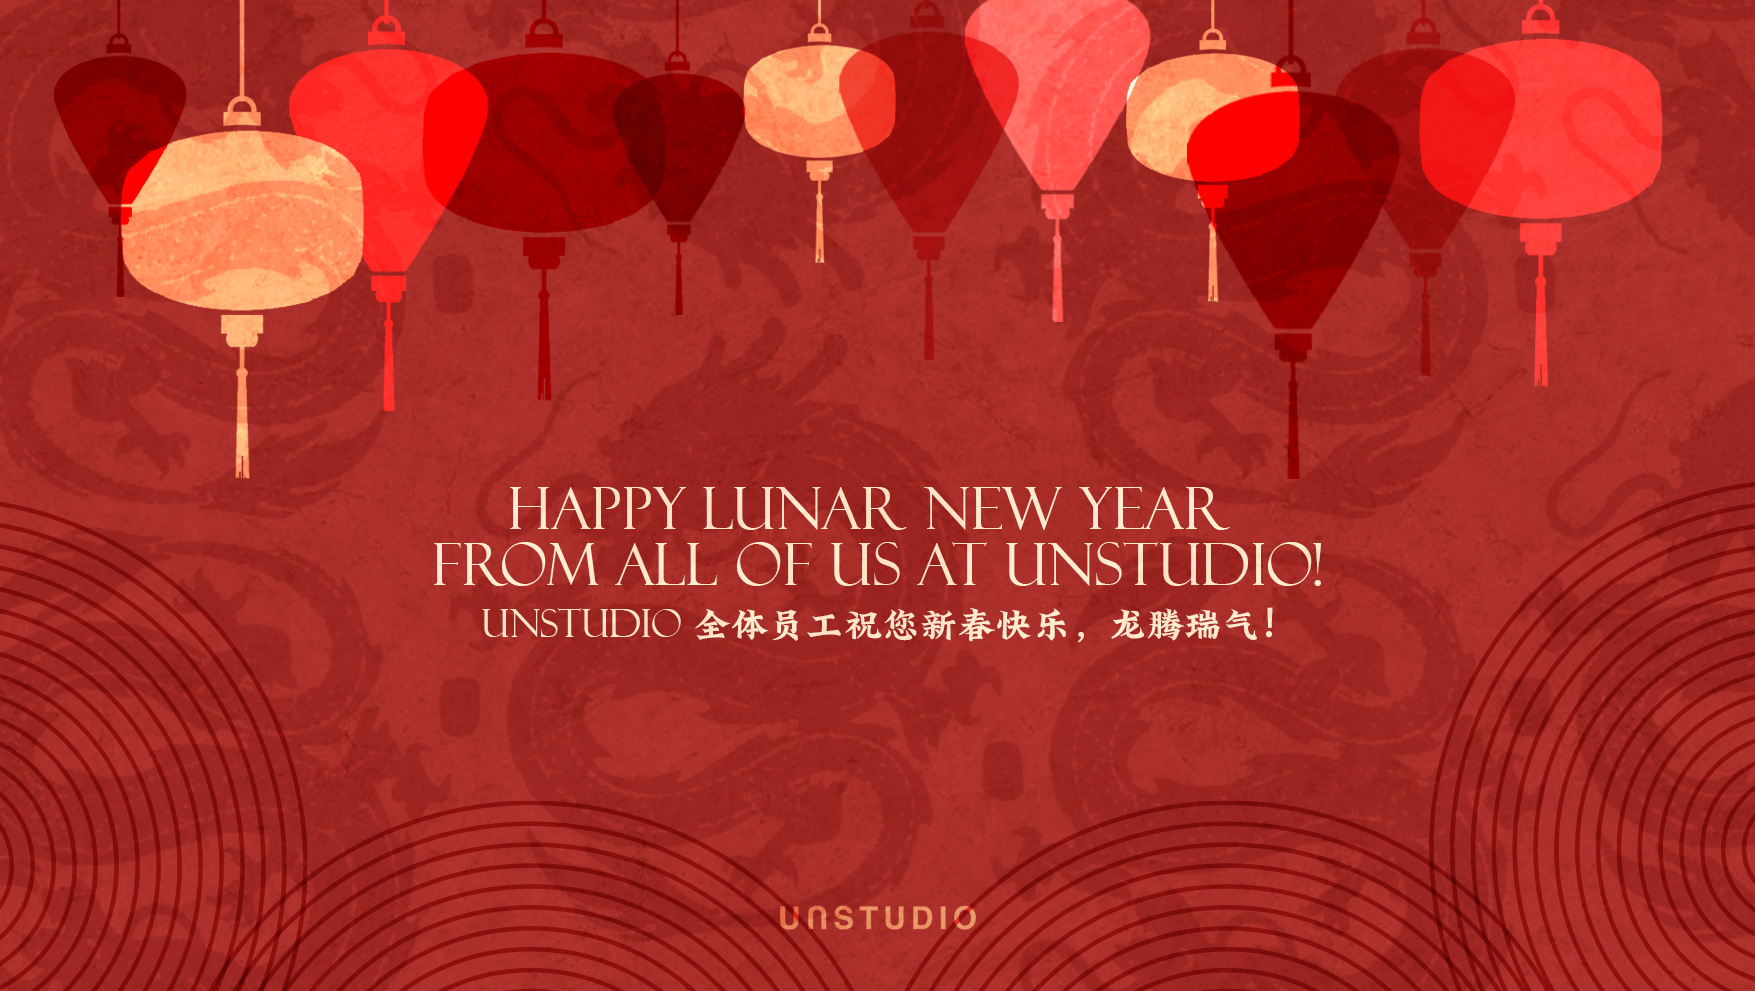 UNStudio Wishes Everyone a Happy Lunar New Year!